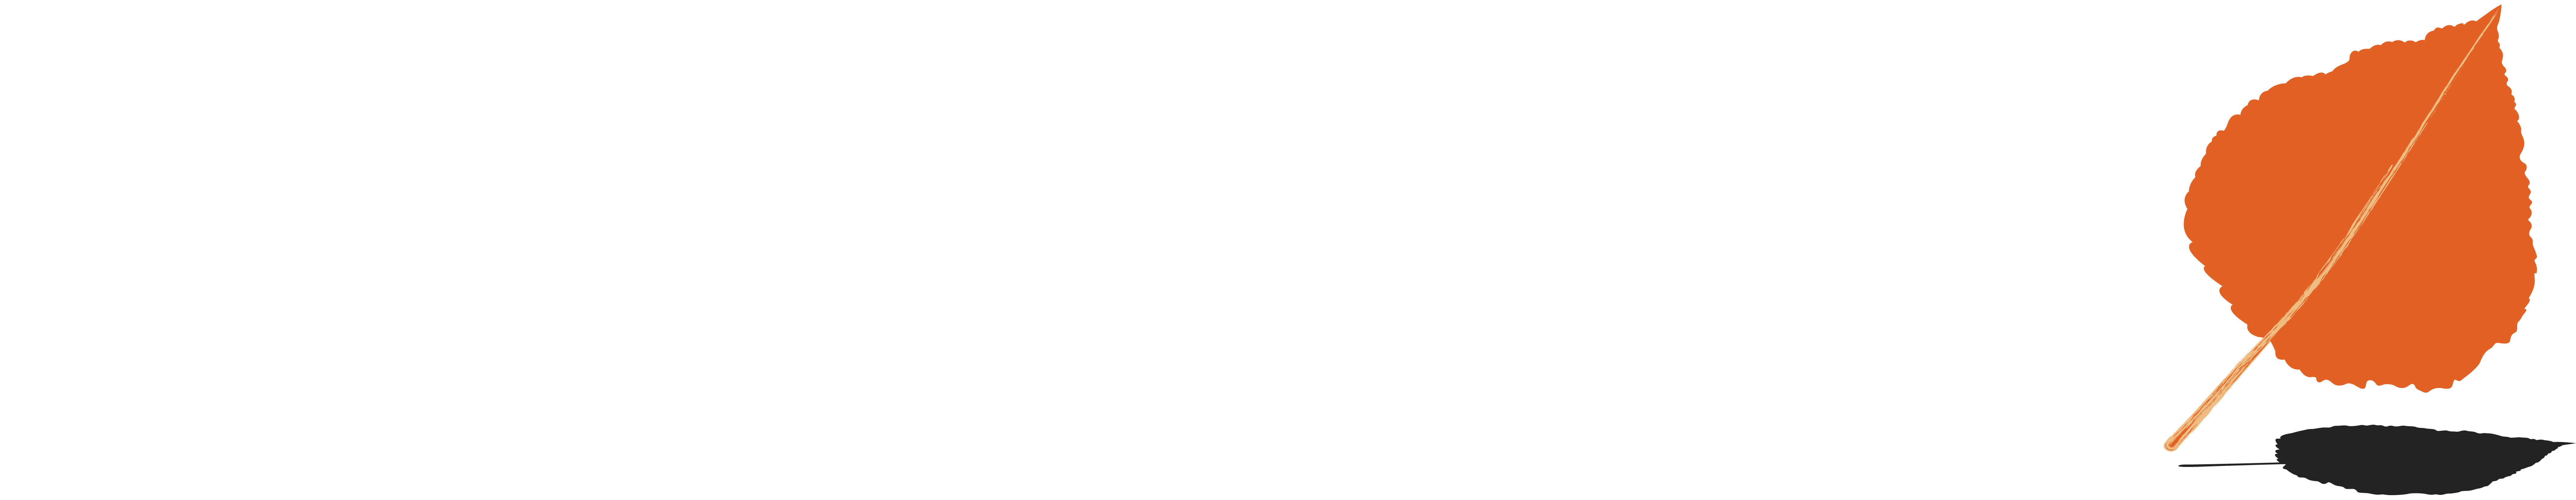 hemsley park logo